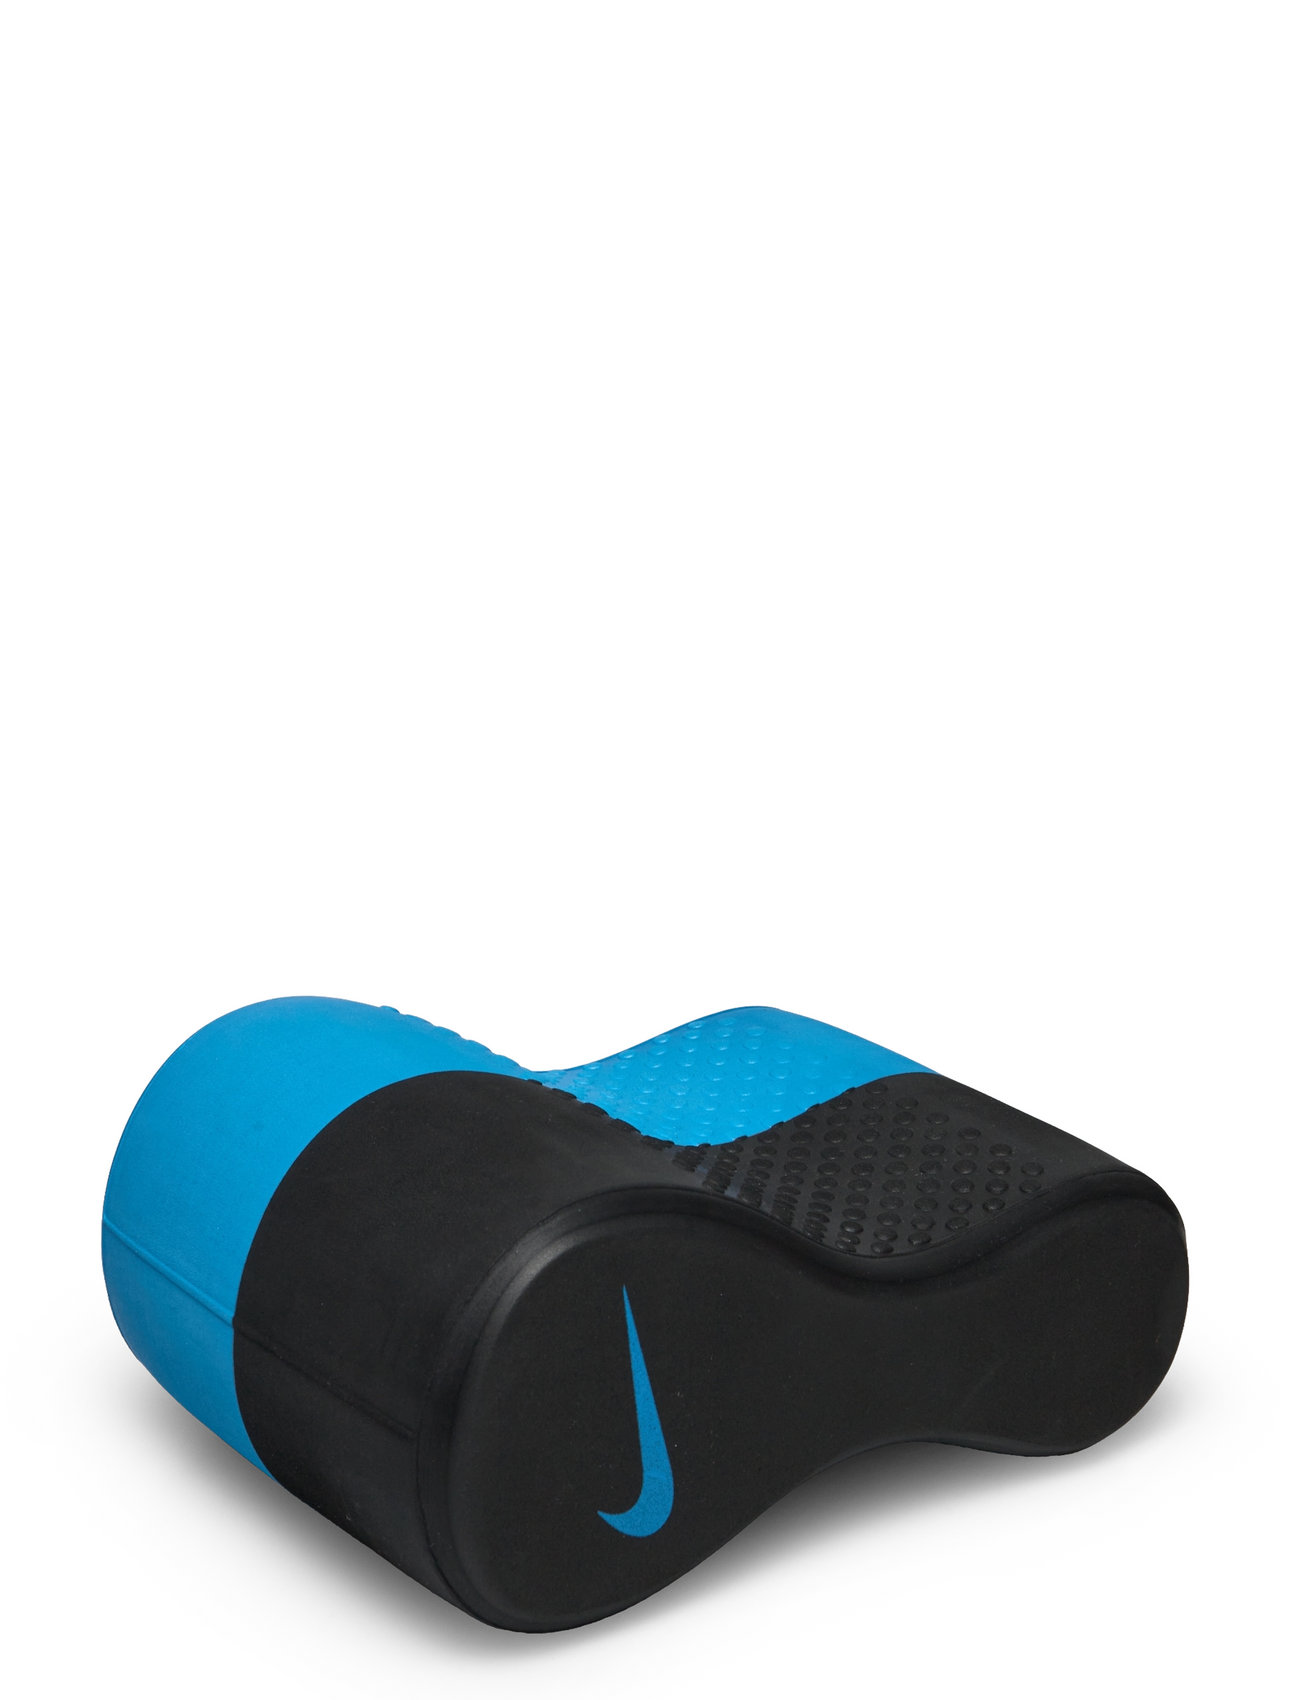 Nike Pull Buoy Sport Sports Equipment Swimming Accessories Black NIKE SWIM